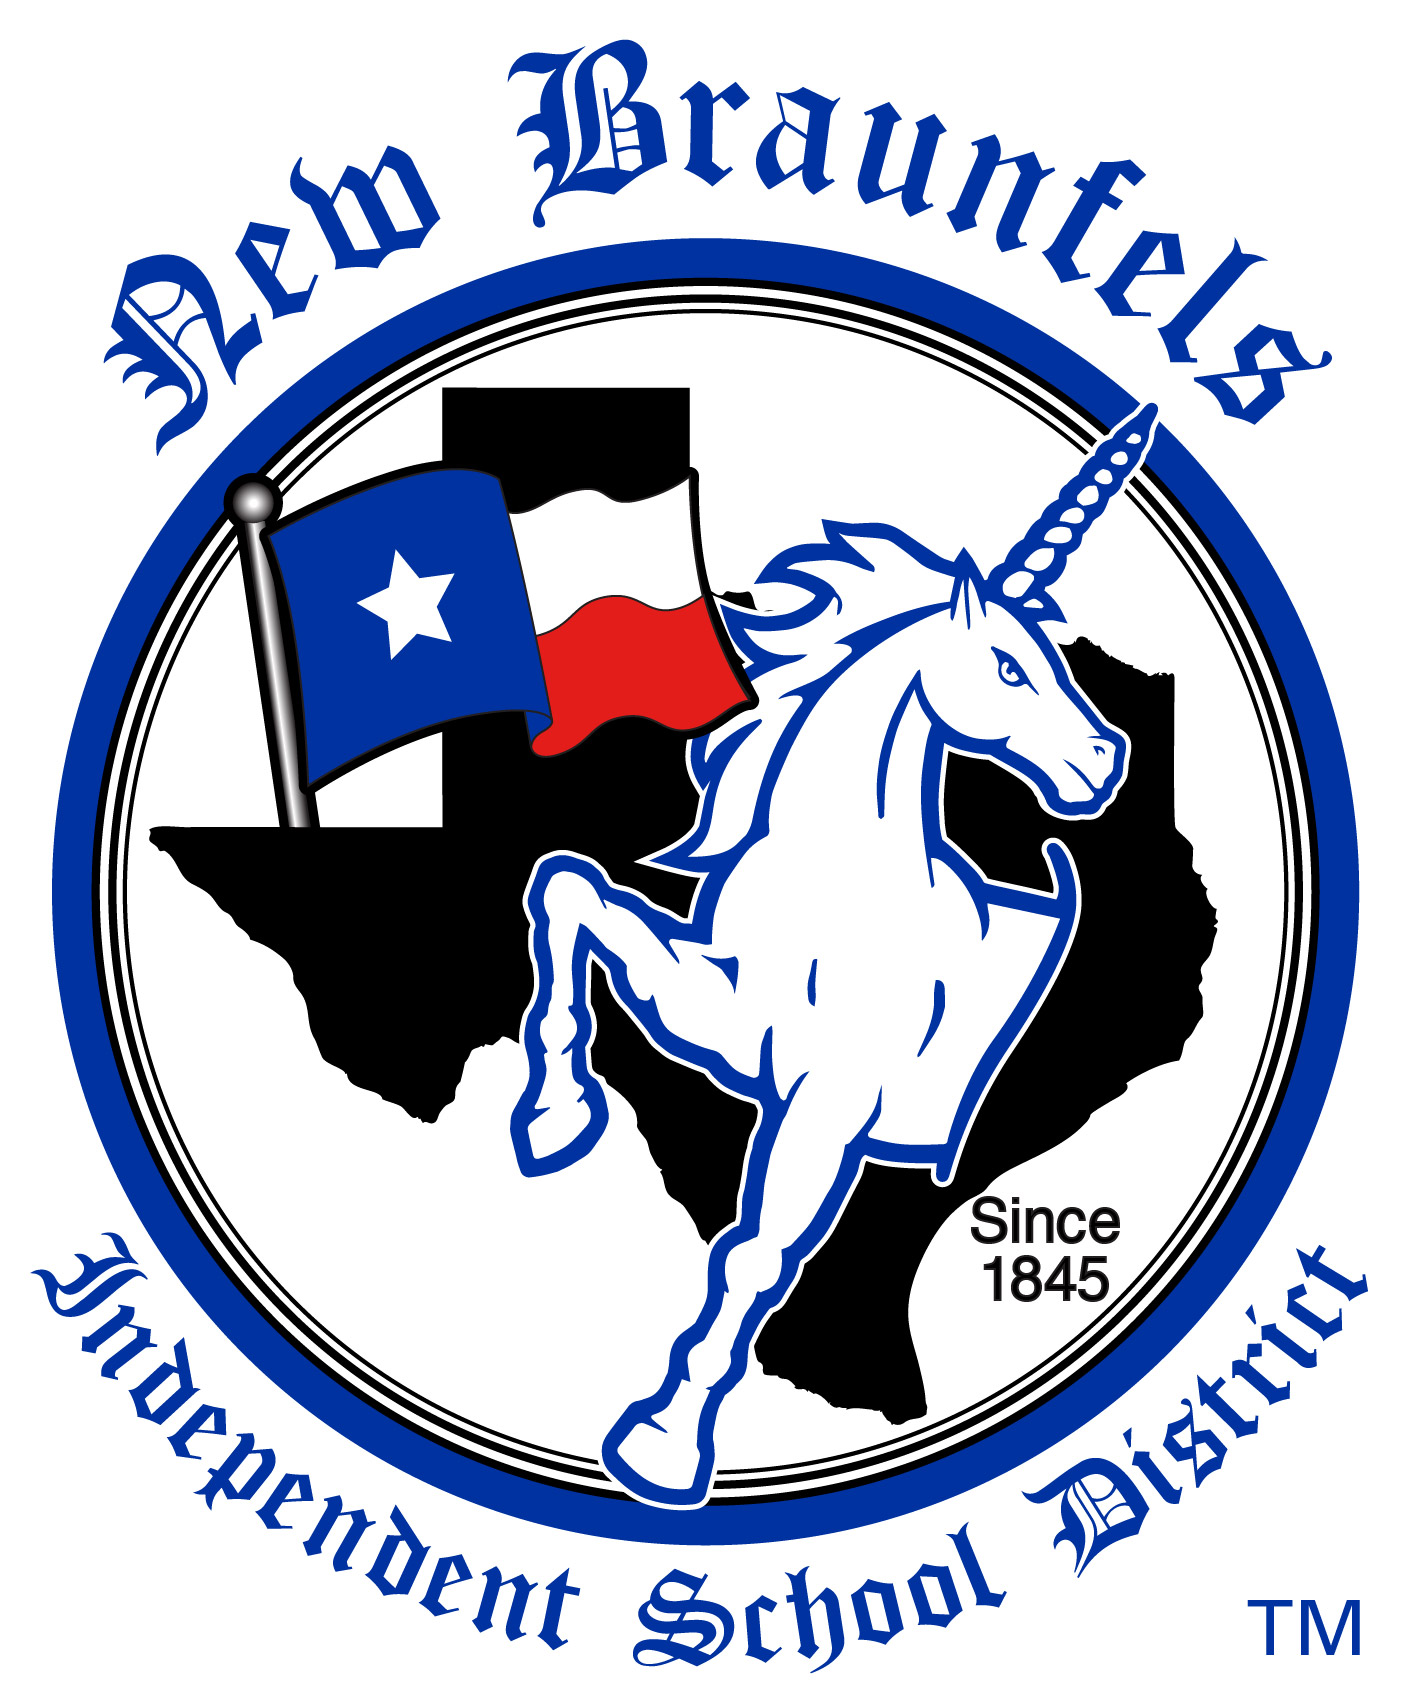 New Braunfels ISD seeks unicorn logo trademark